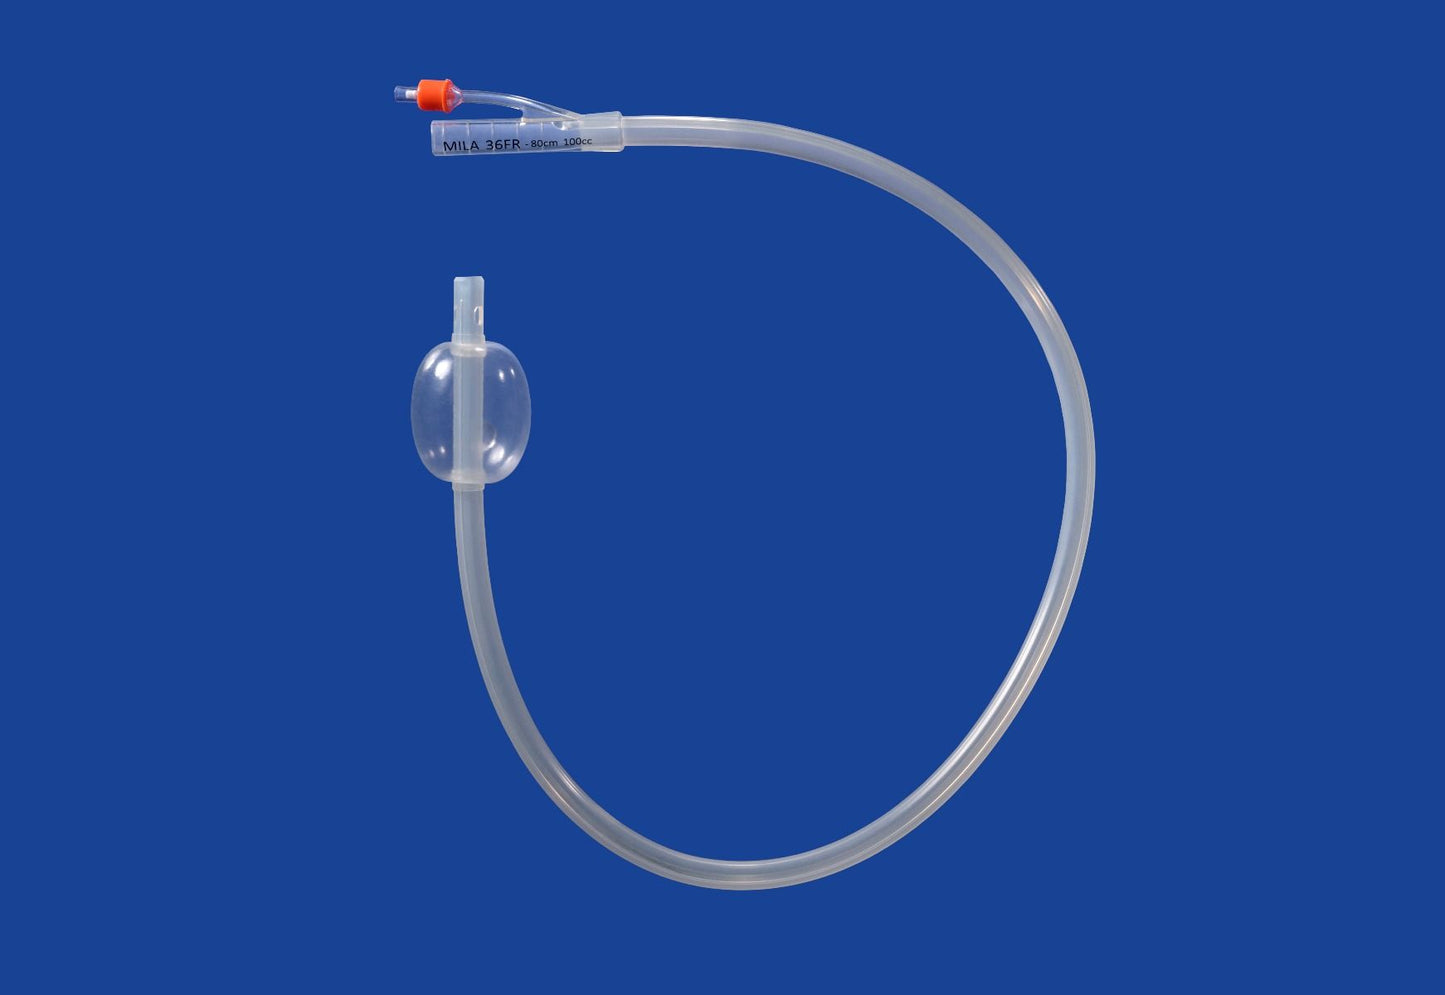 36Fr x 80cm catheter with 100cc balloon cuff